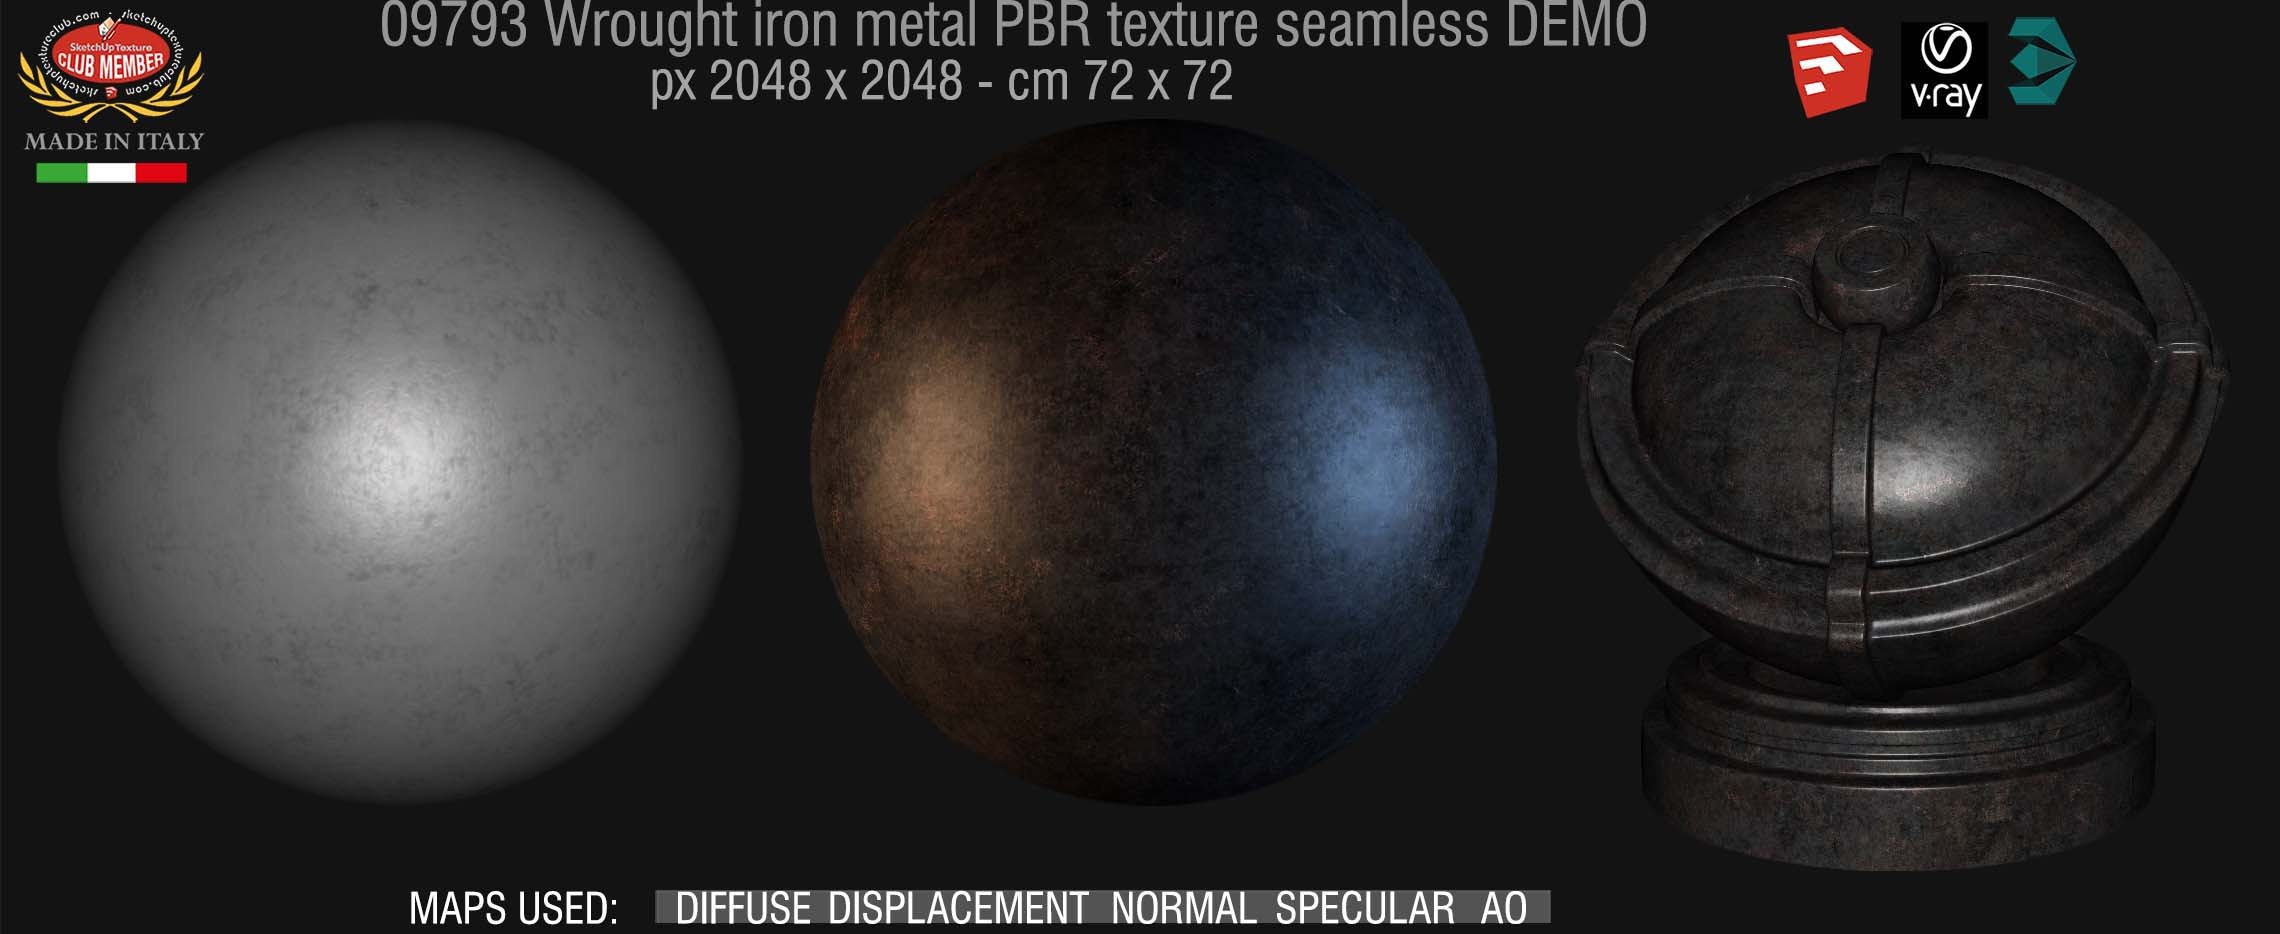 09793 wrought iron metal PBR texture seamless DEMO